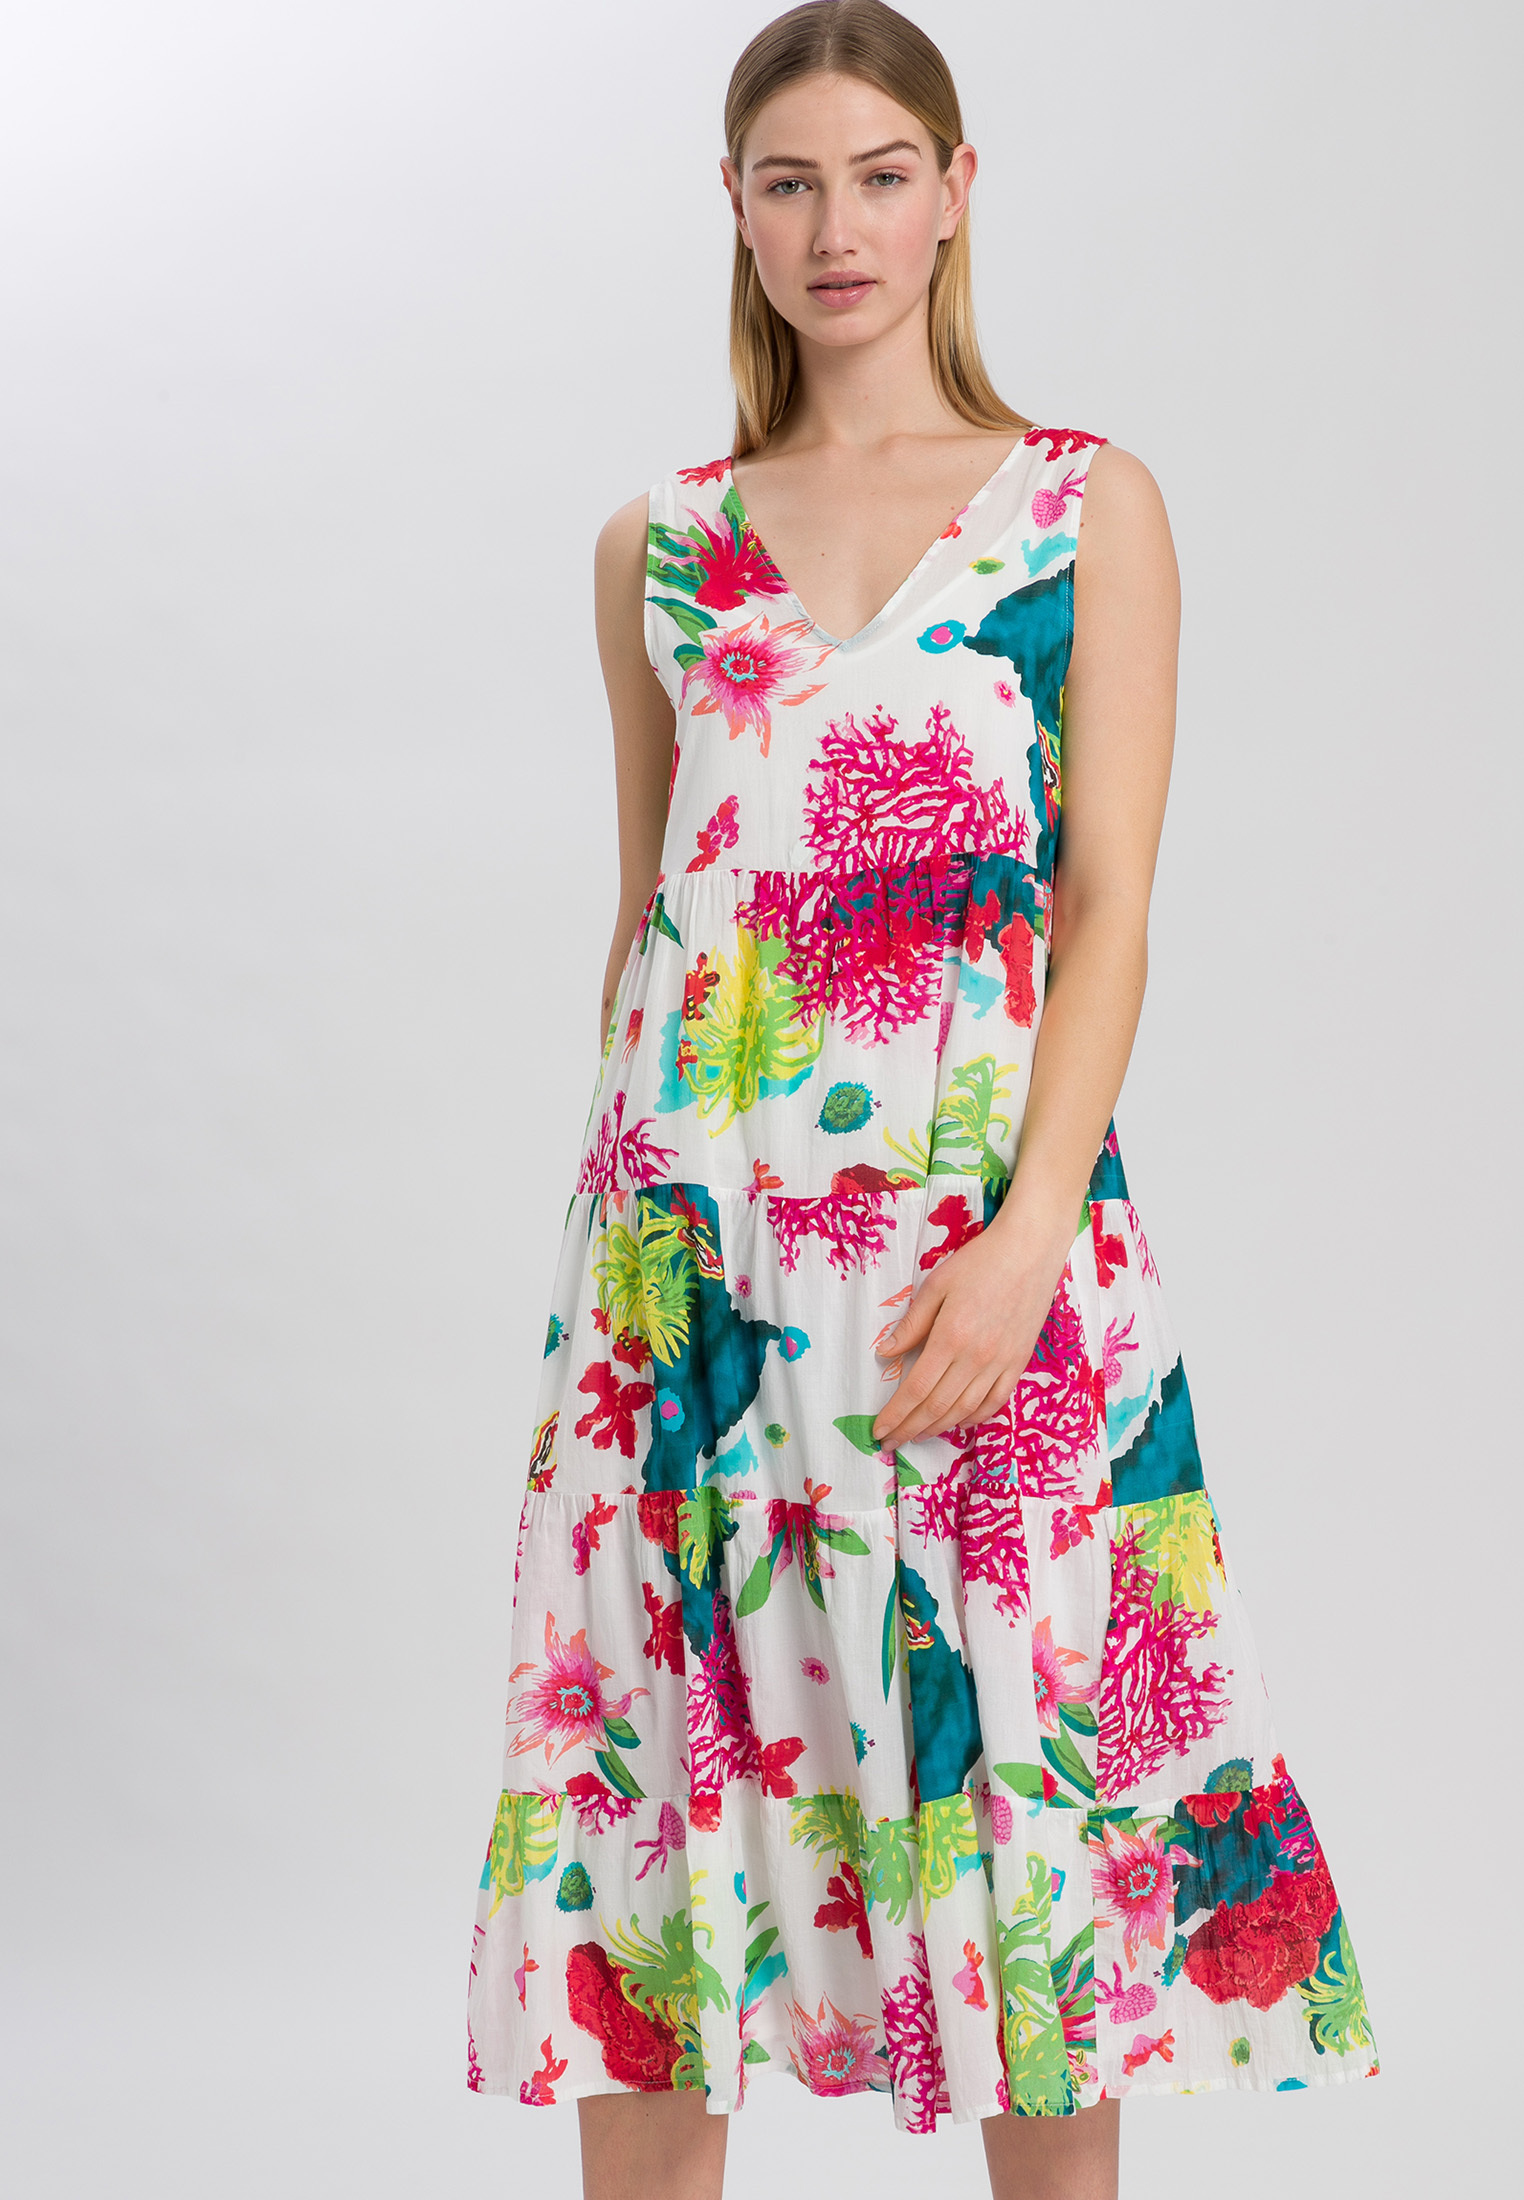 Strap Dress with caribbean print | Dresses & Skirts | Fashion